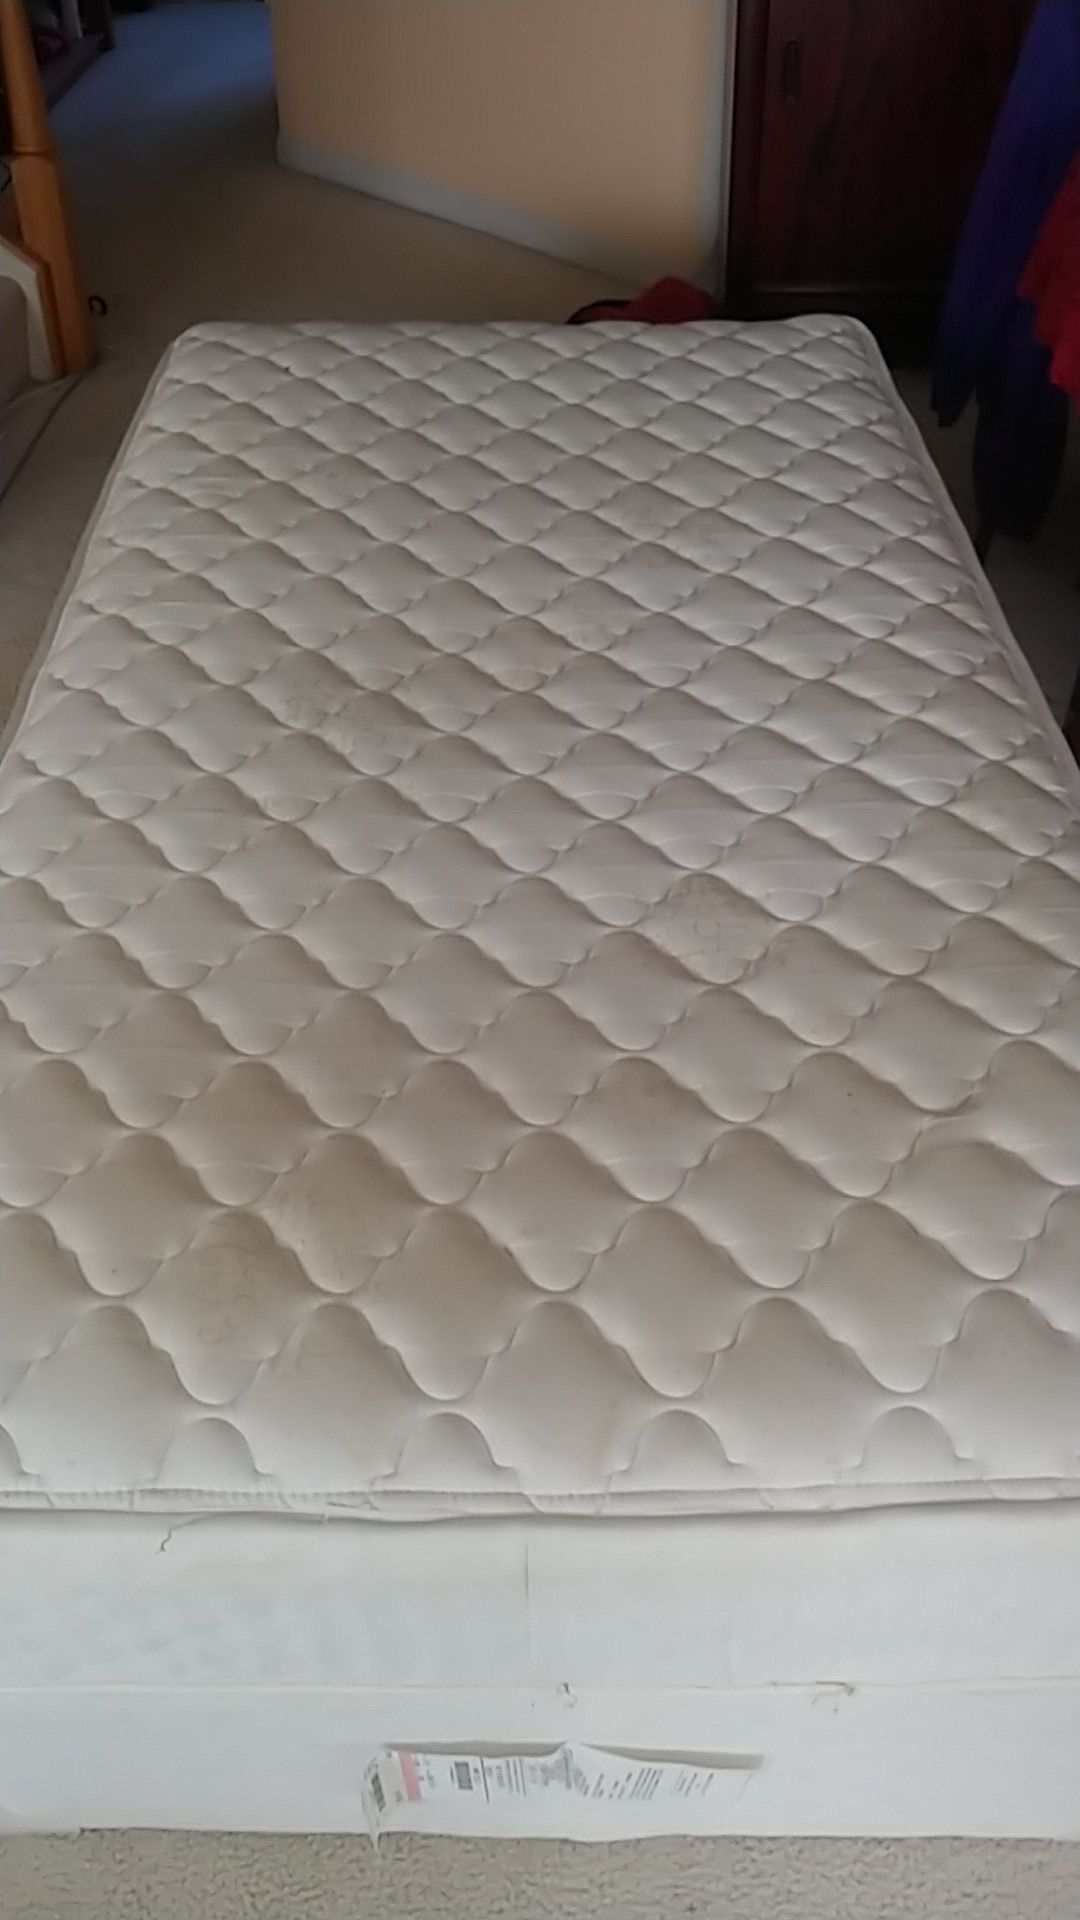 Sealy mattress and box spring